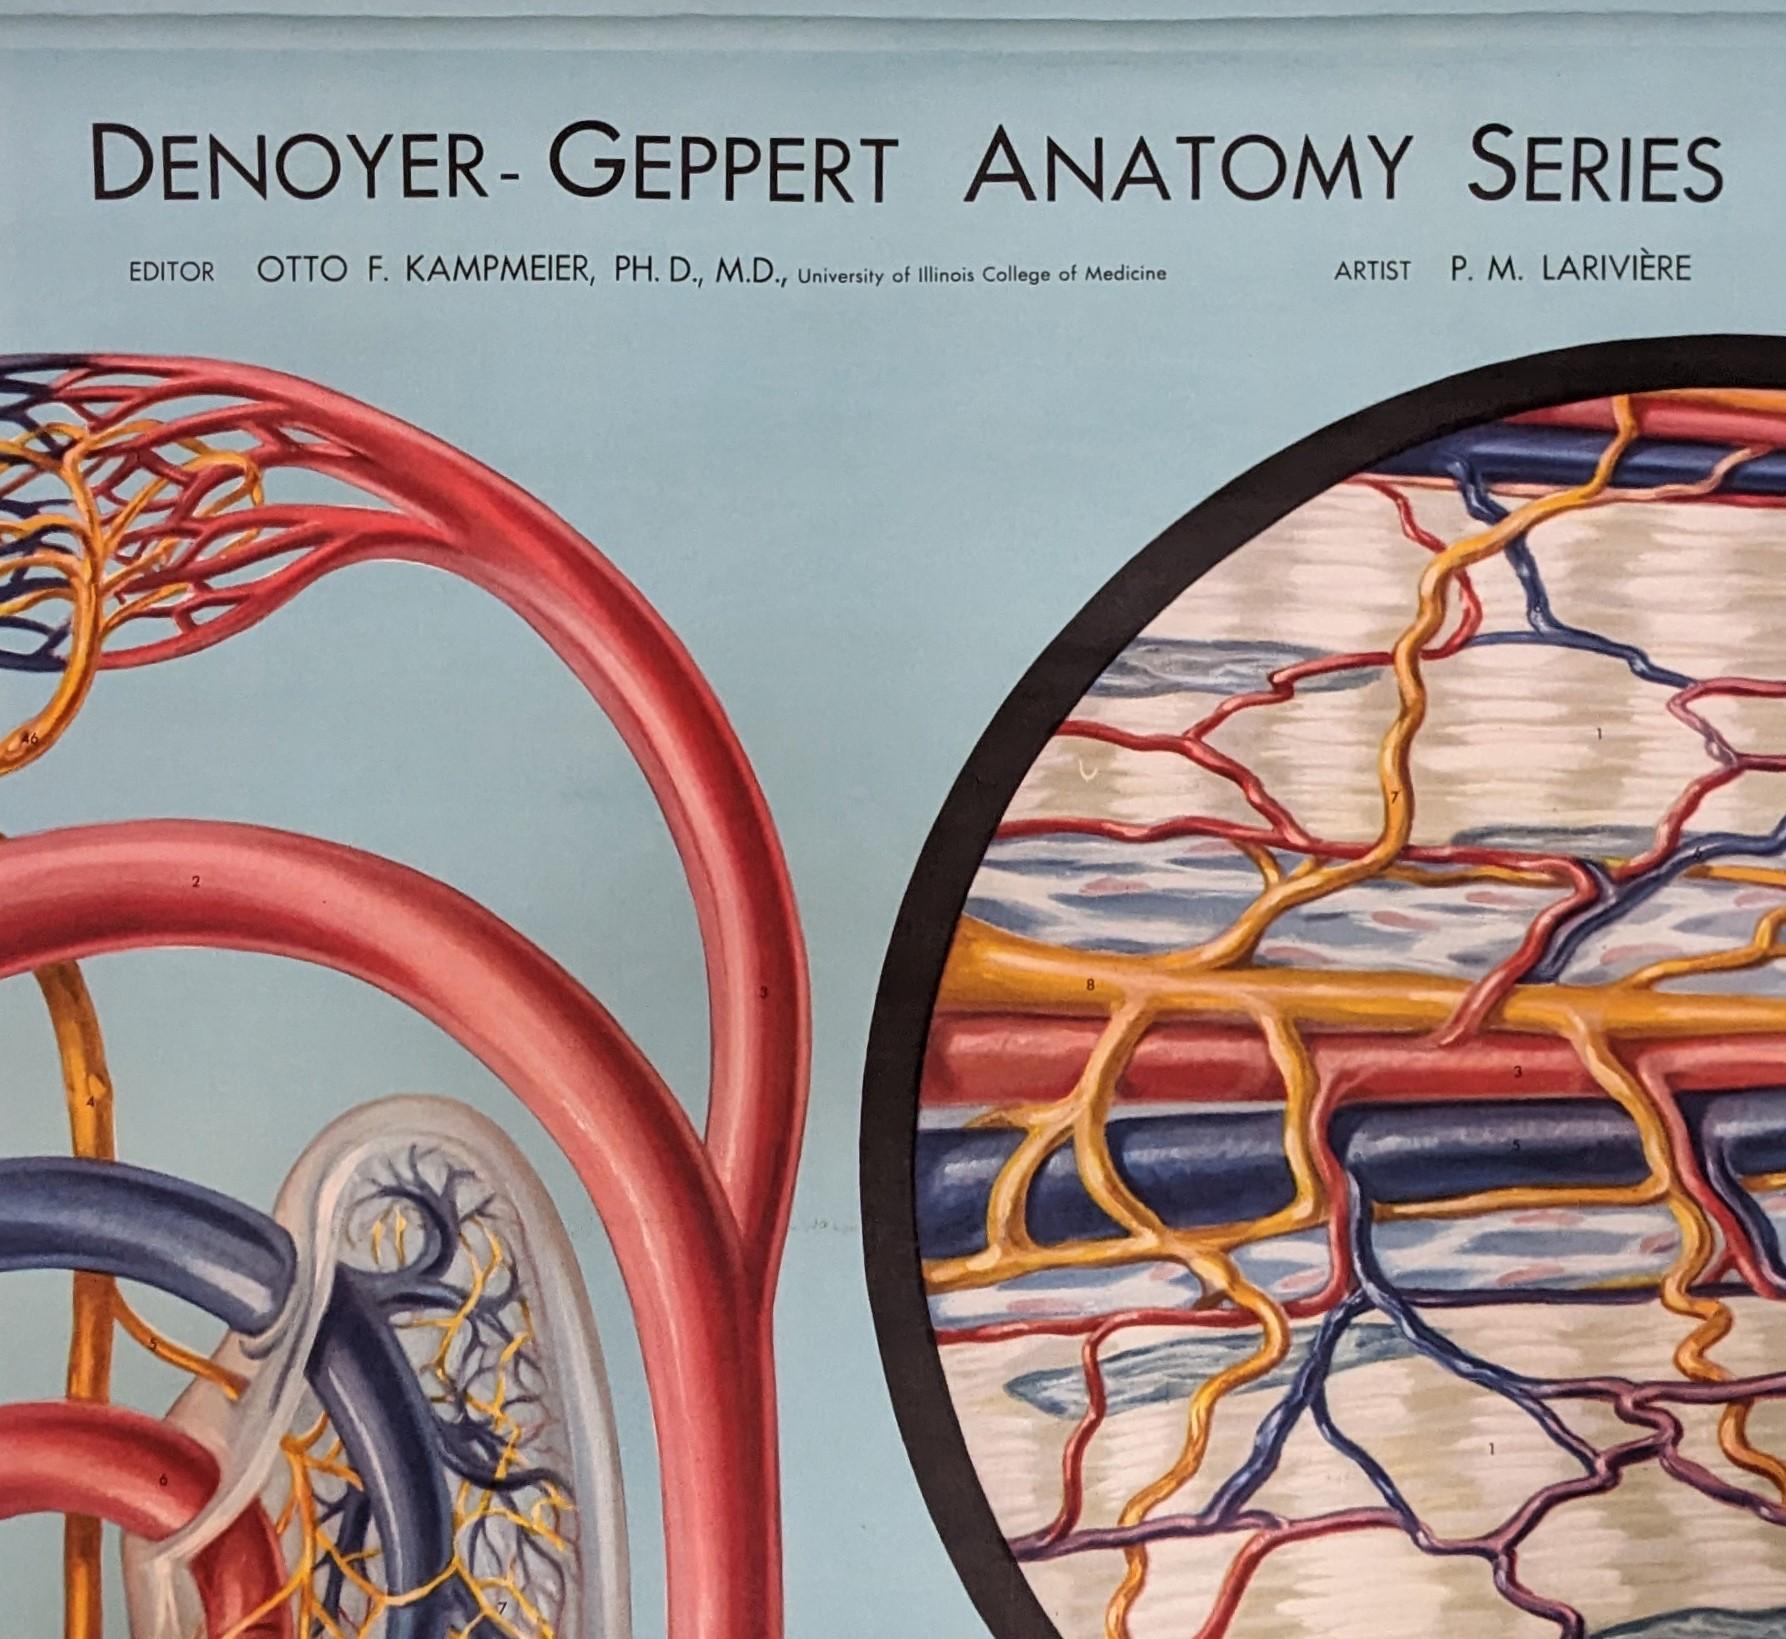 Denoyer-Geppert Anatomy Chart

Overall Dimensions: 73 3/4